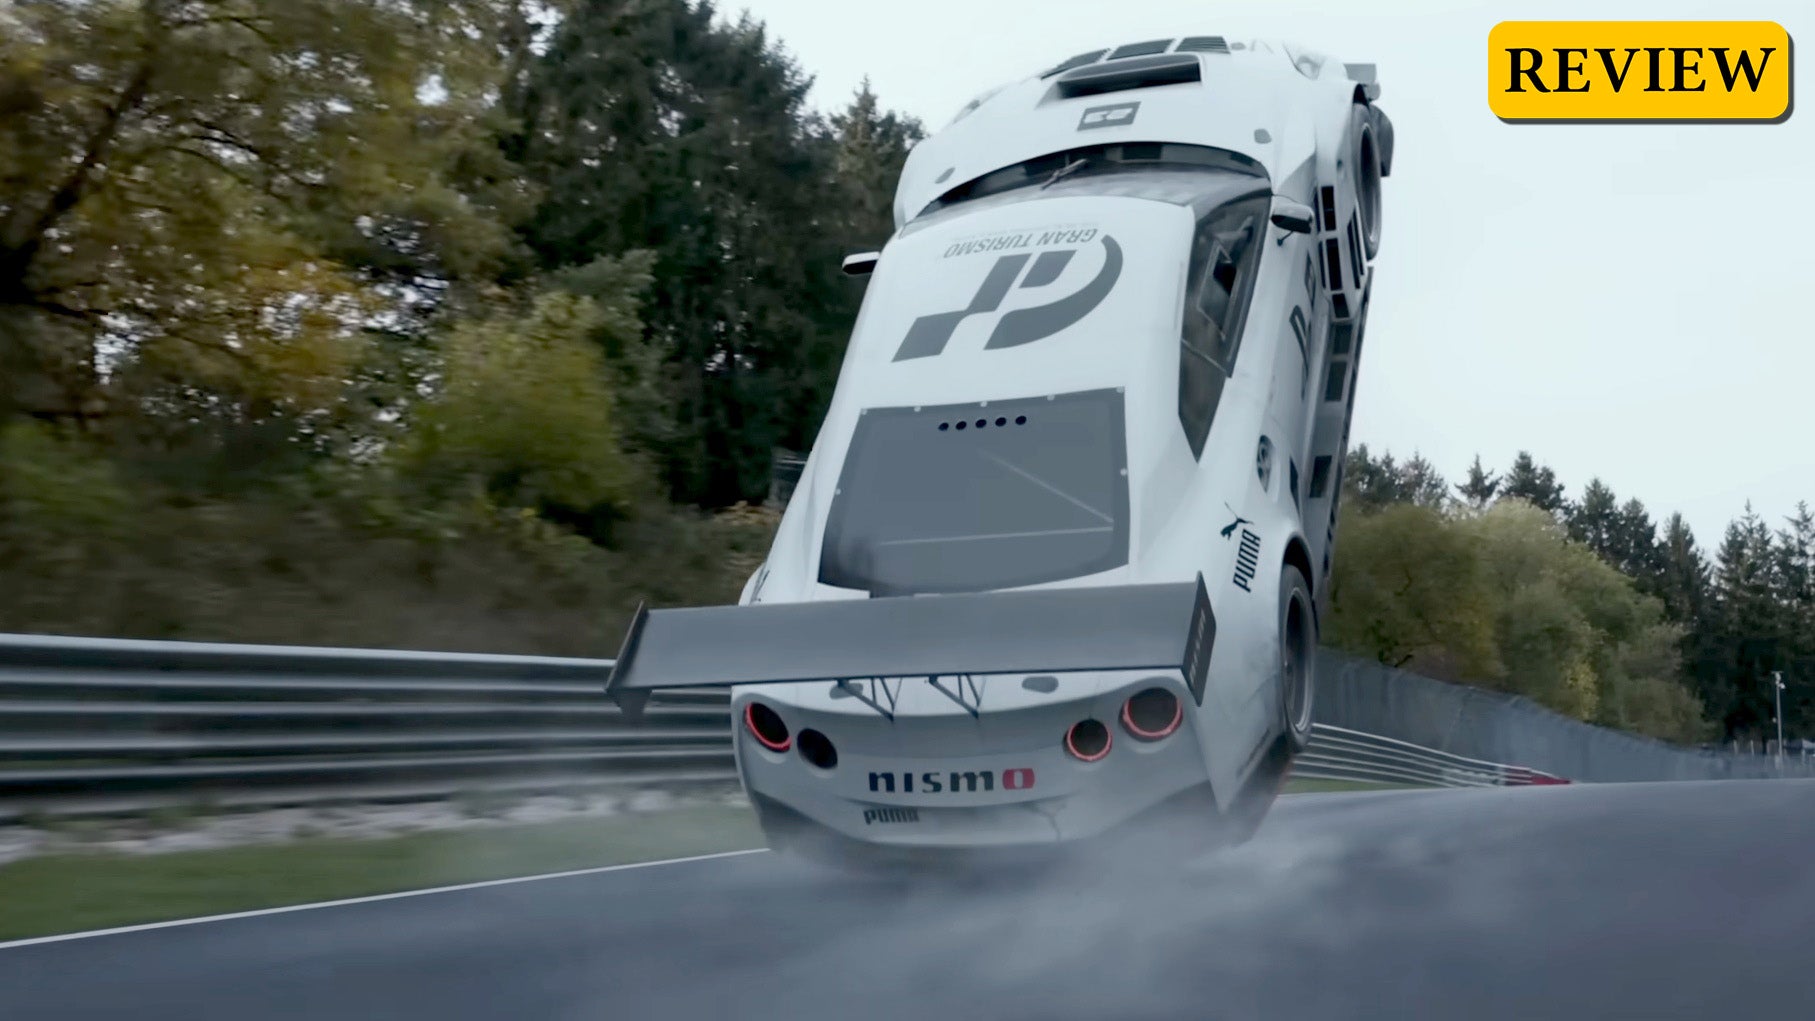 Gran Turismo 7 review: Racing magnificence